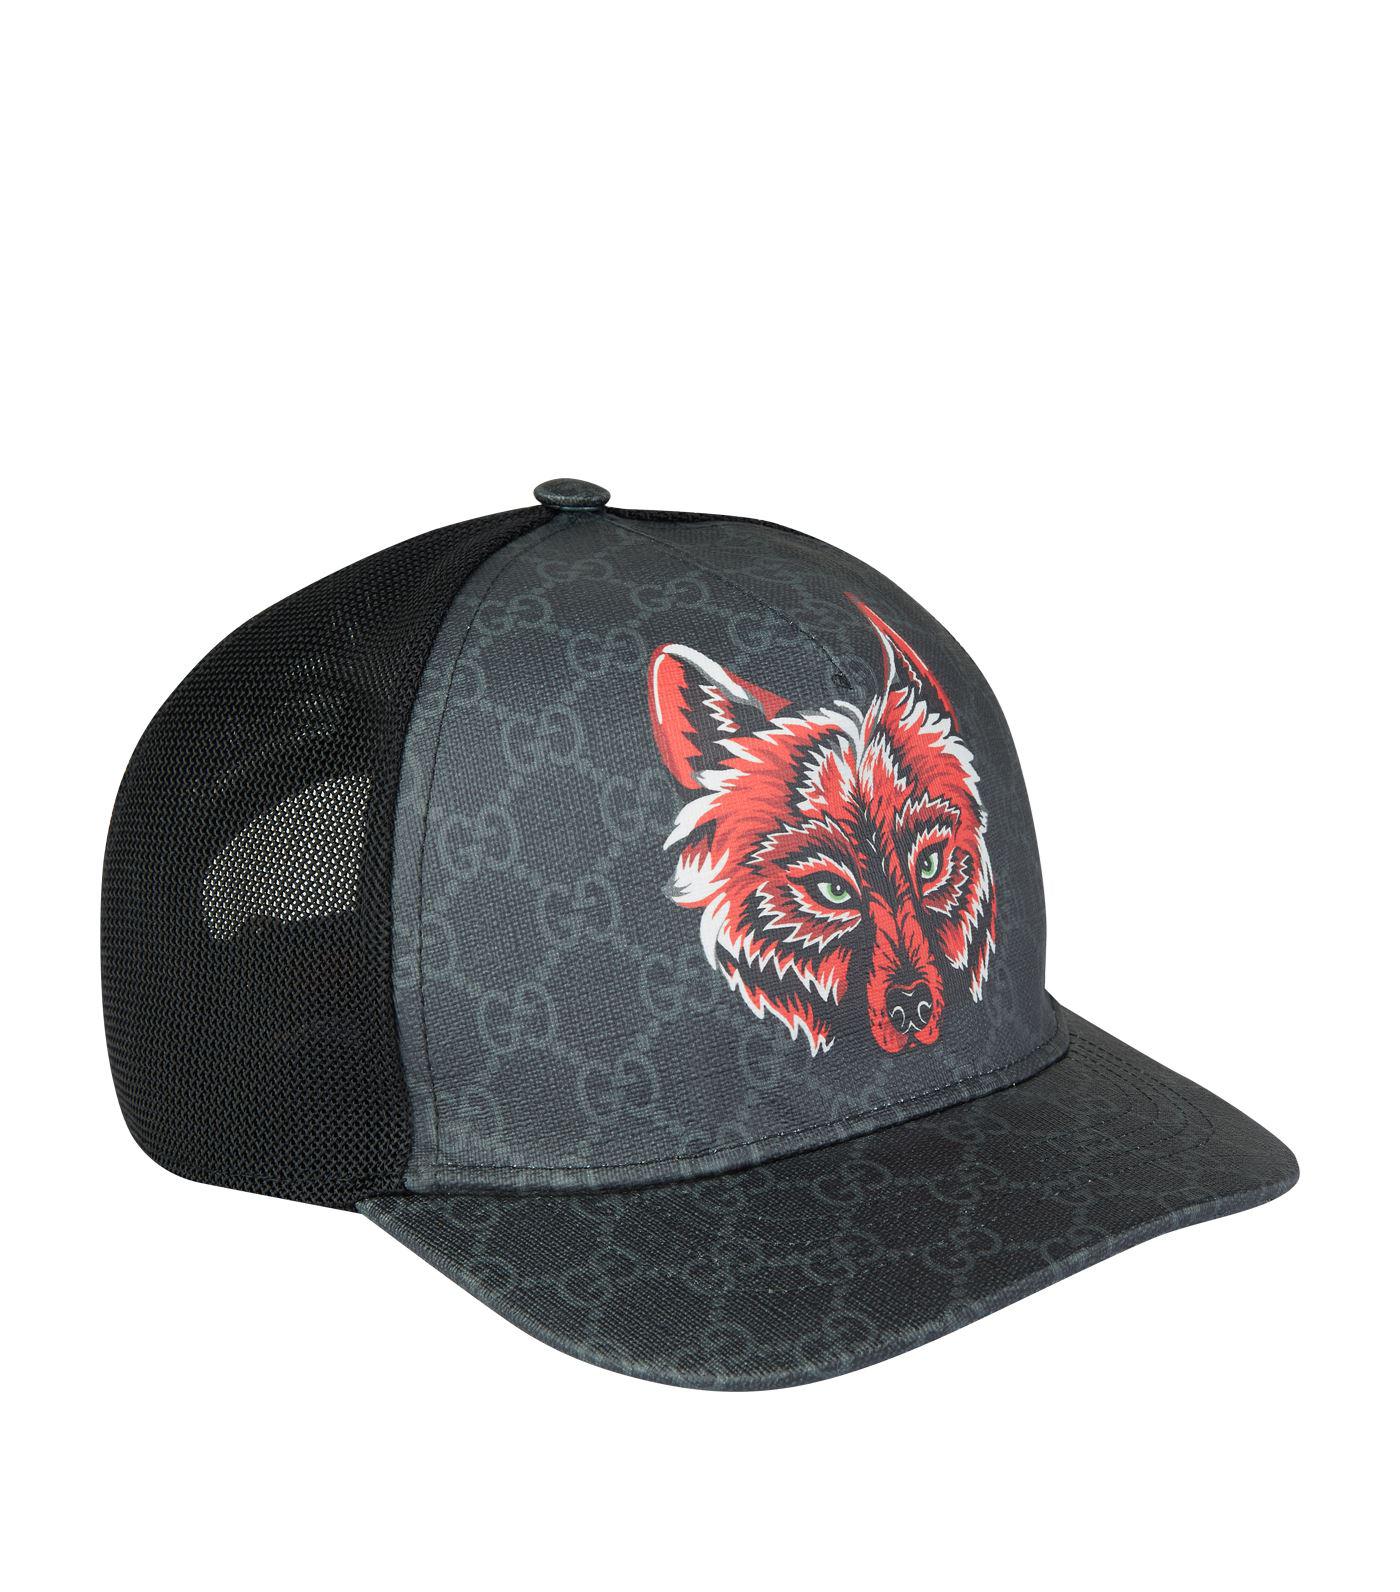 Gucci Wolf Head GG-Supreme Cap in Black for Men - Lyst